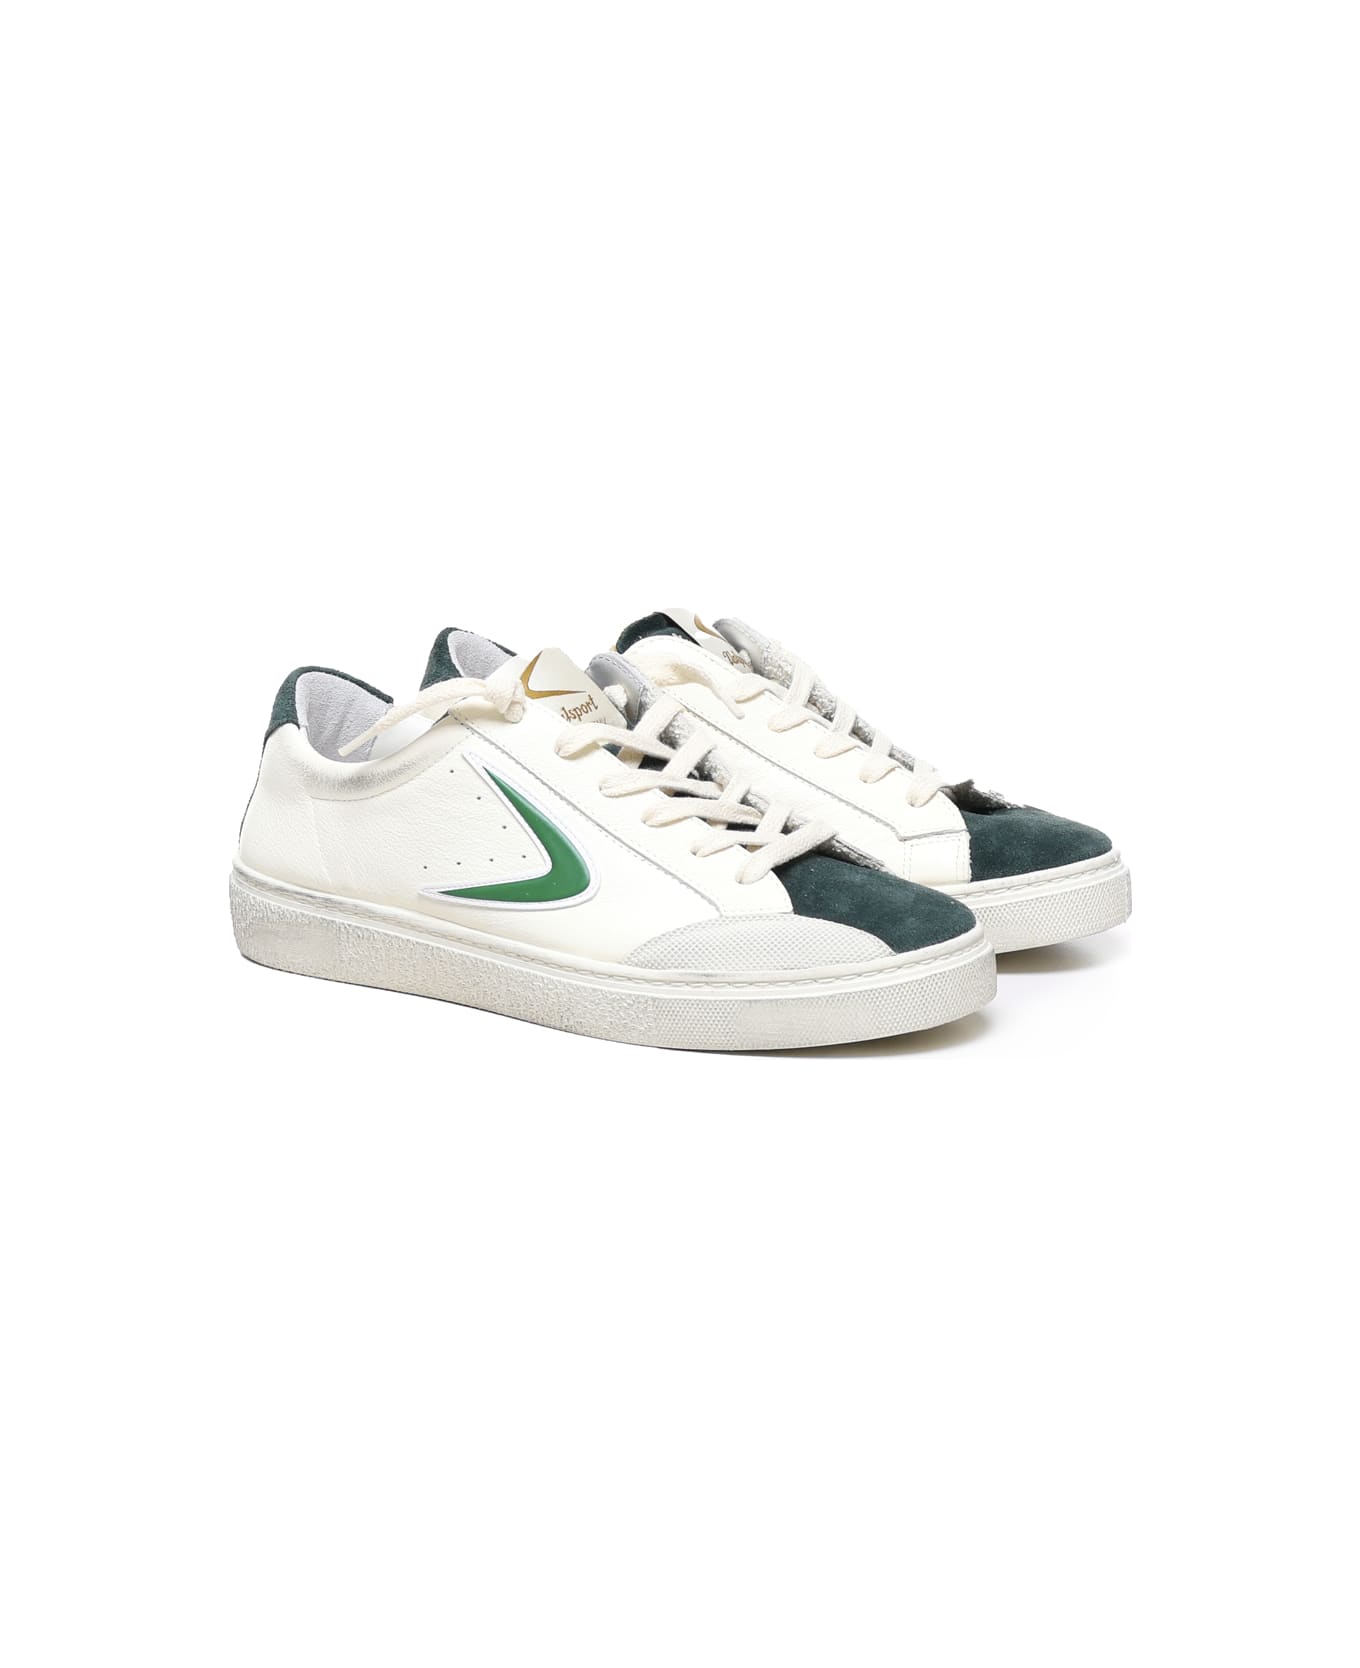 Valsport Ollie Goofy Sneakers - White, green